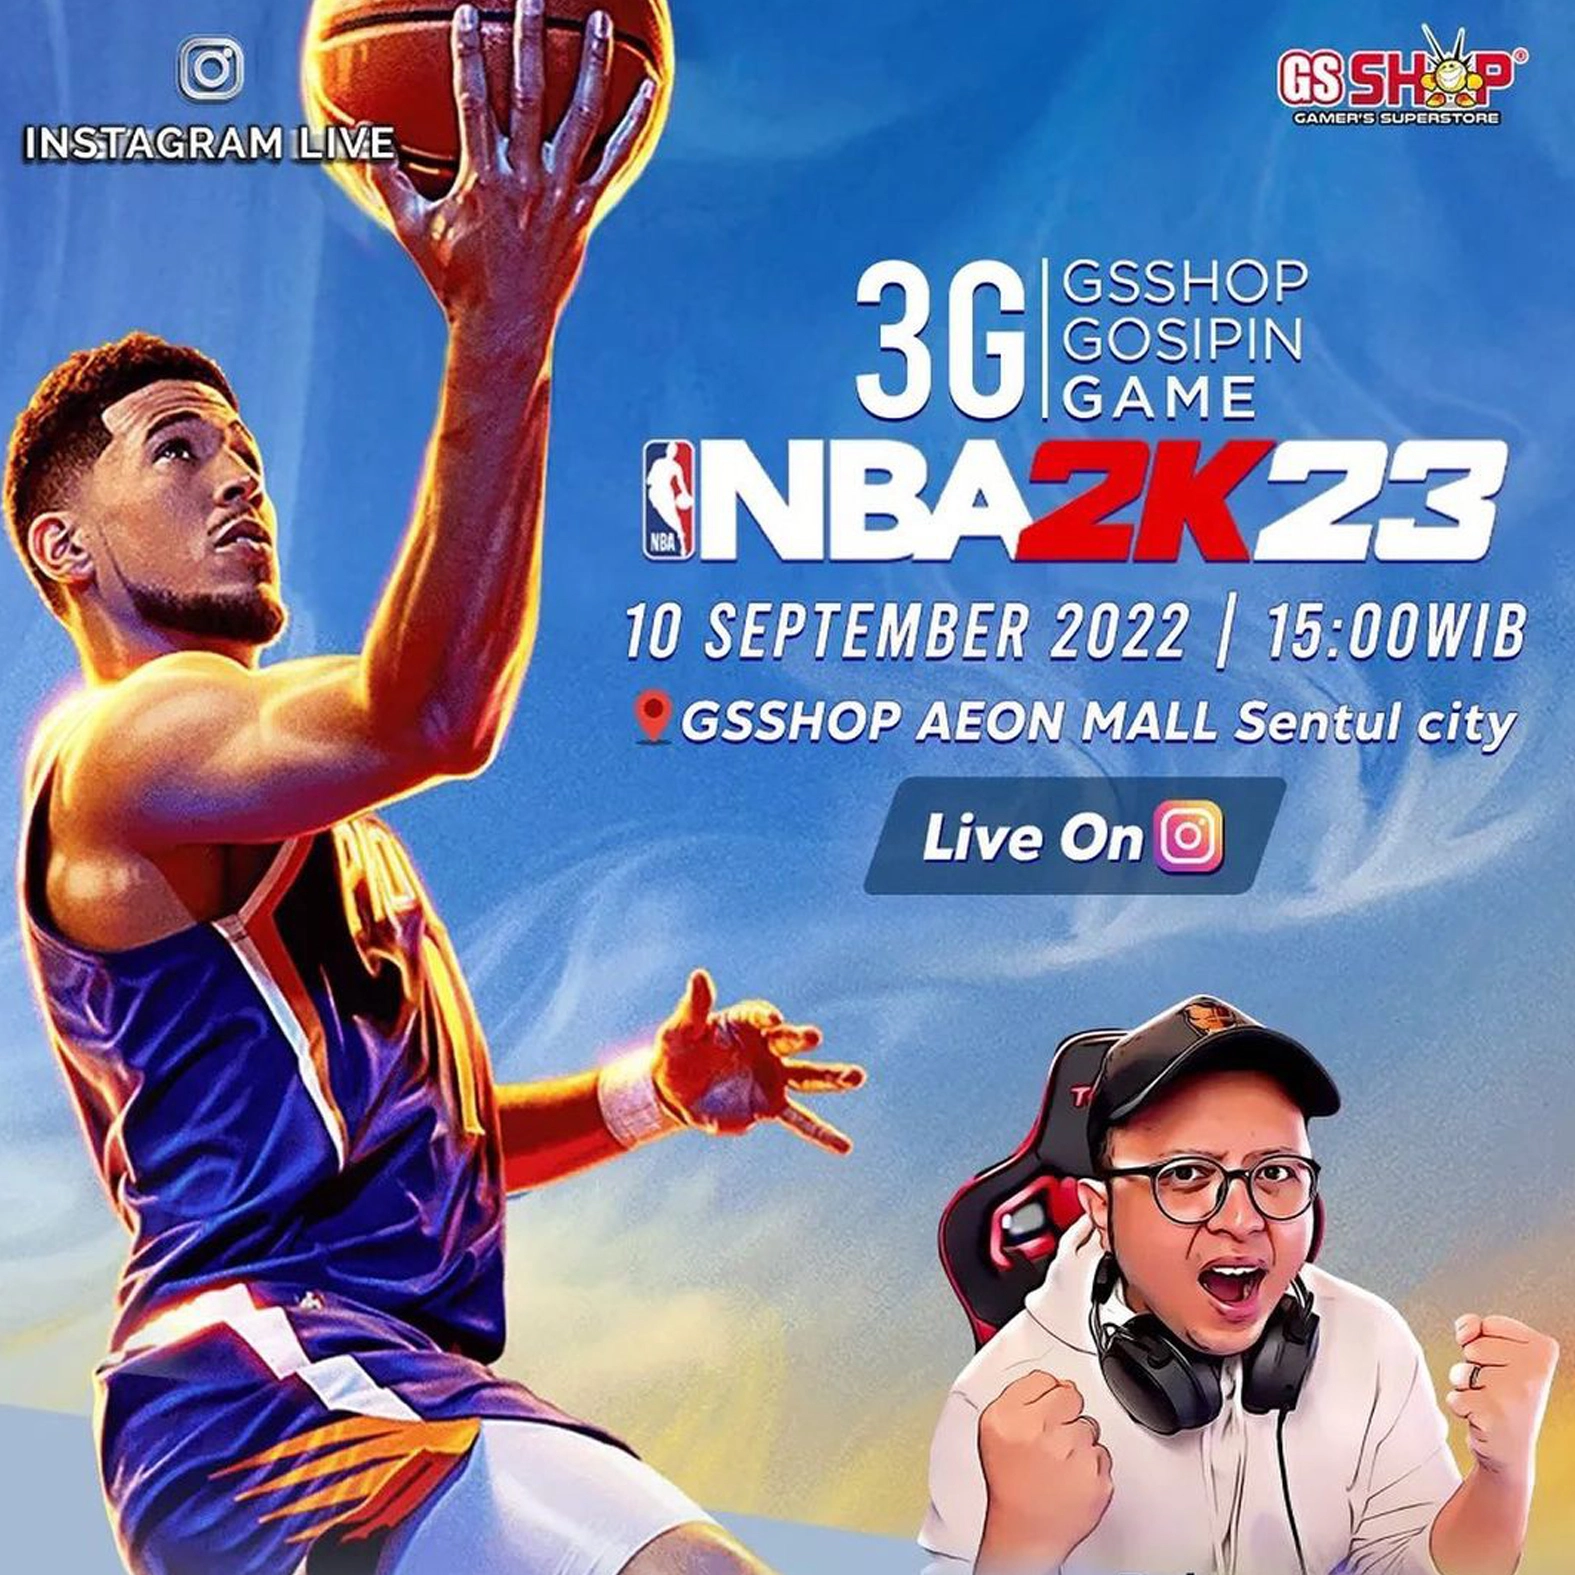 GSSHOP NBA 2K23 Launching Live Event